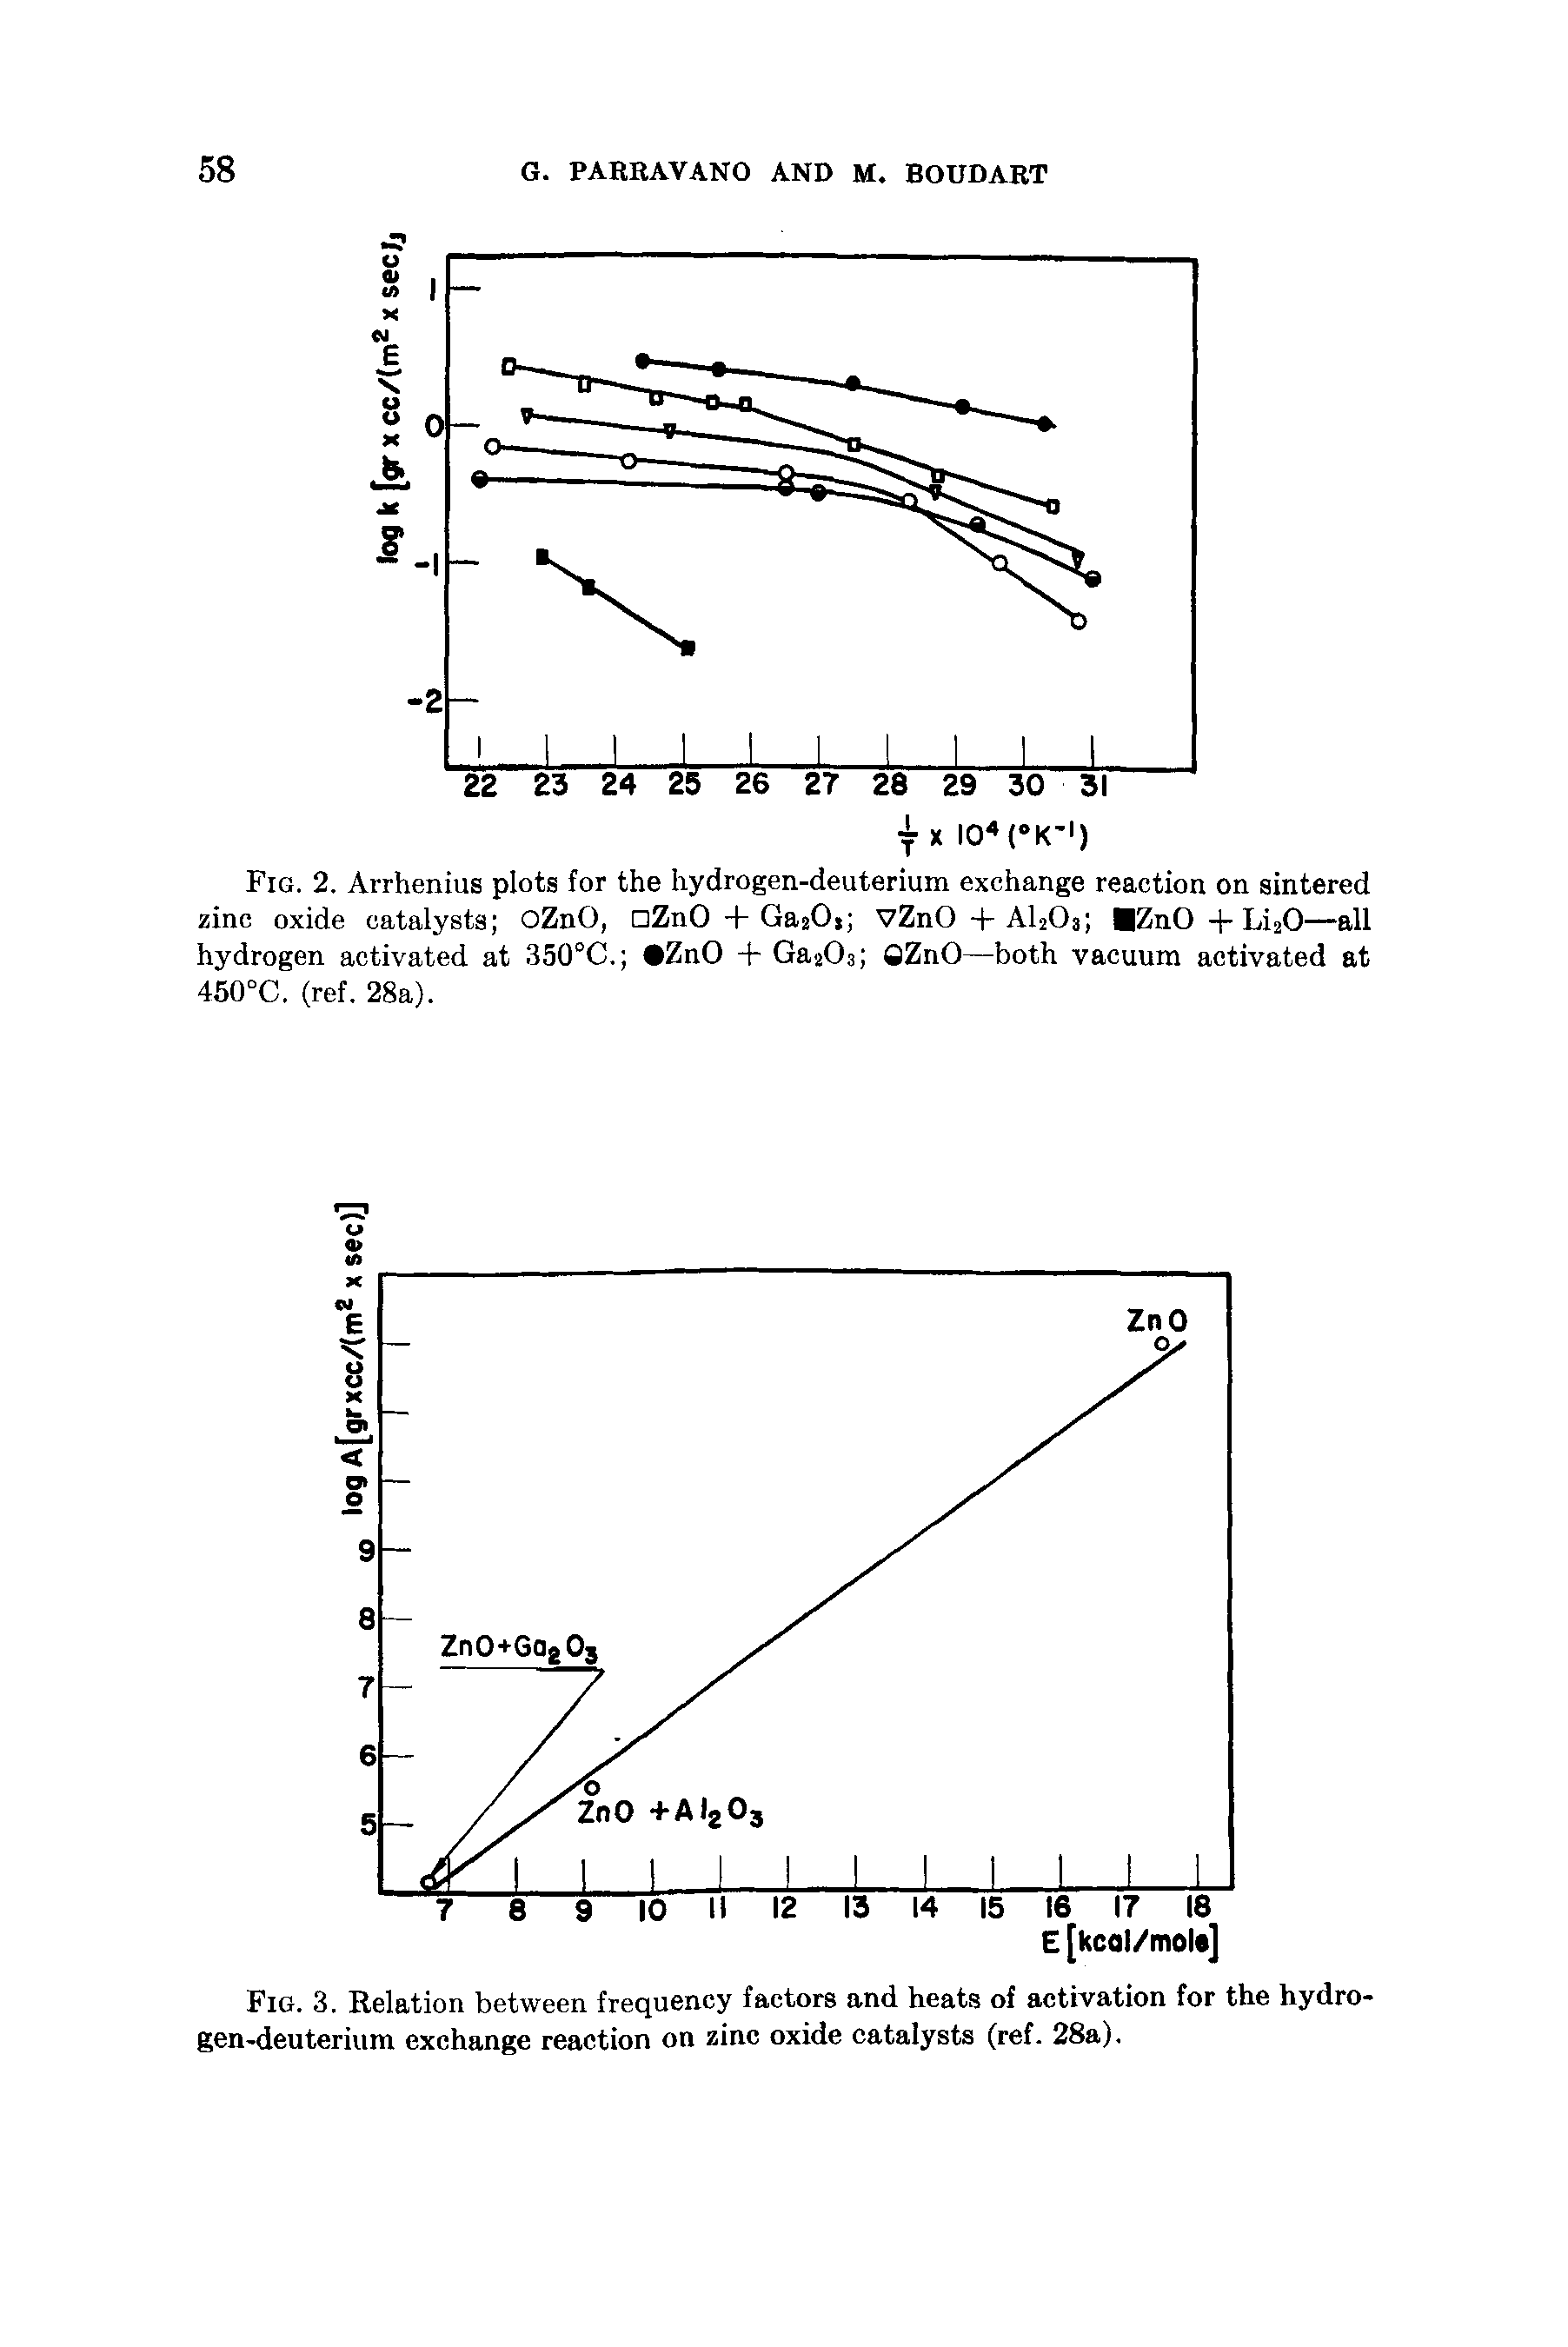 Fig. 3. Relation between frequency factors and heats of activation for the hydrogen-deuterium exchange reaction on zinc oxide catalysts (ref. 28a).